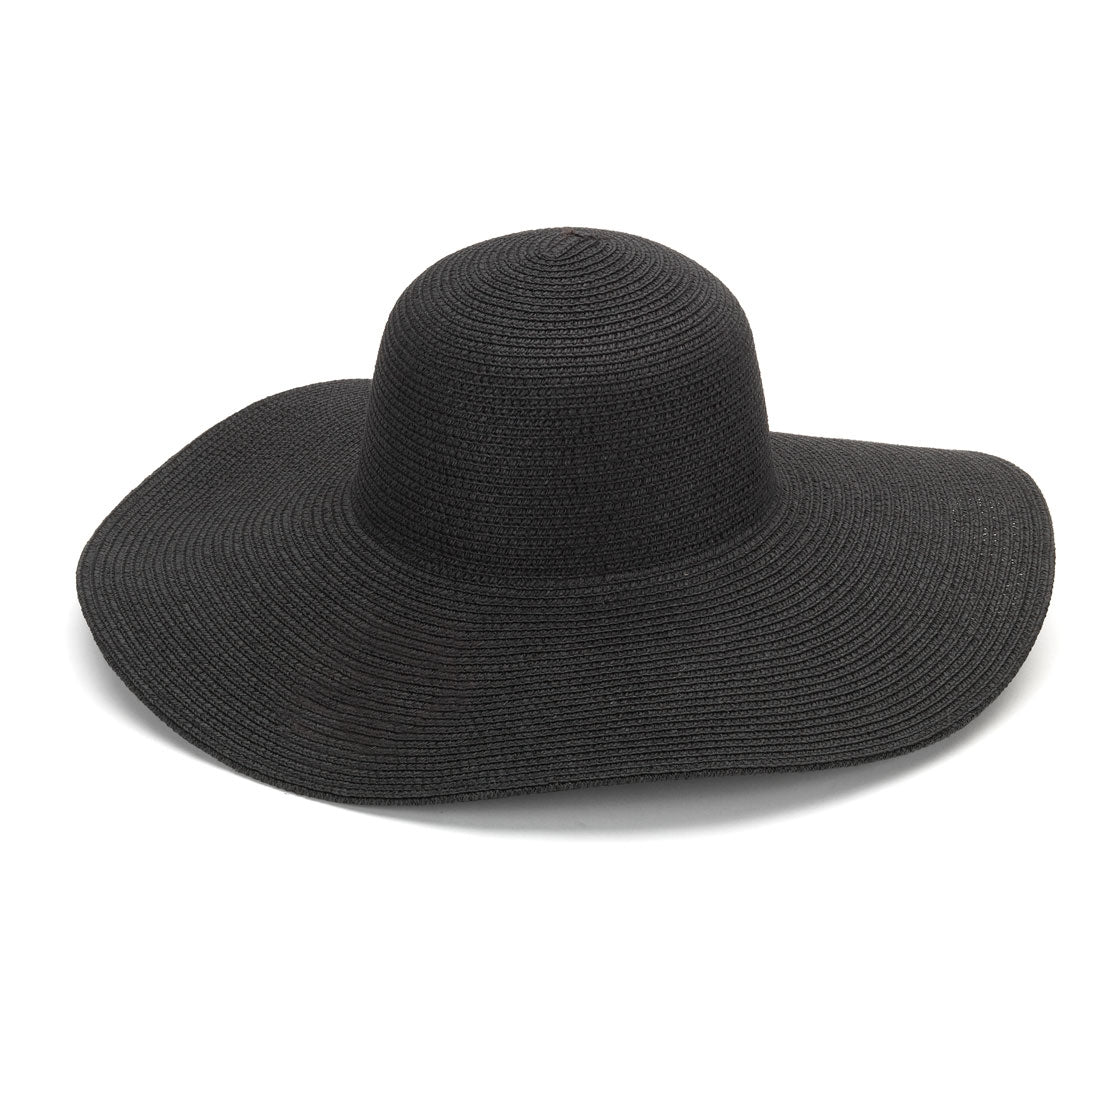 Black Adult Floppy Hat